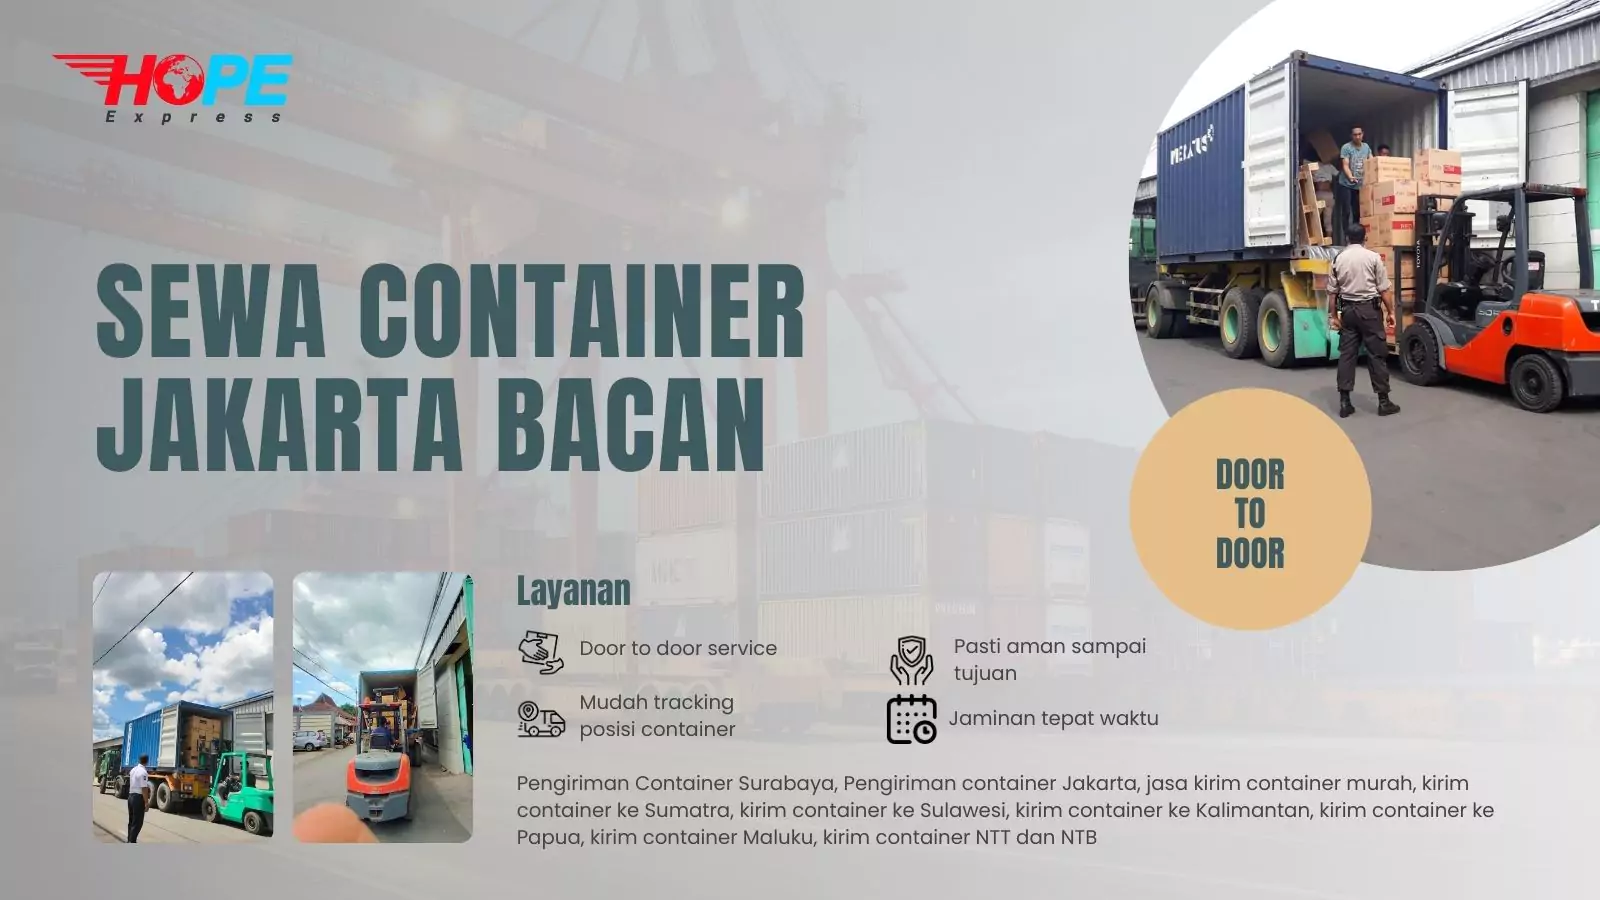 Sewa Container Jakarta Bacan